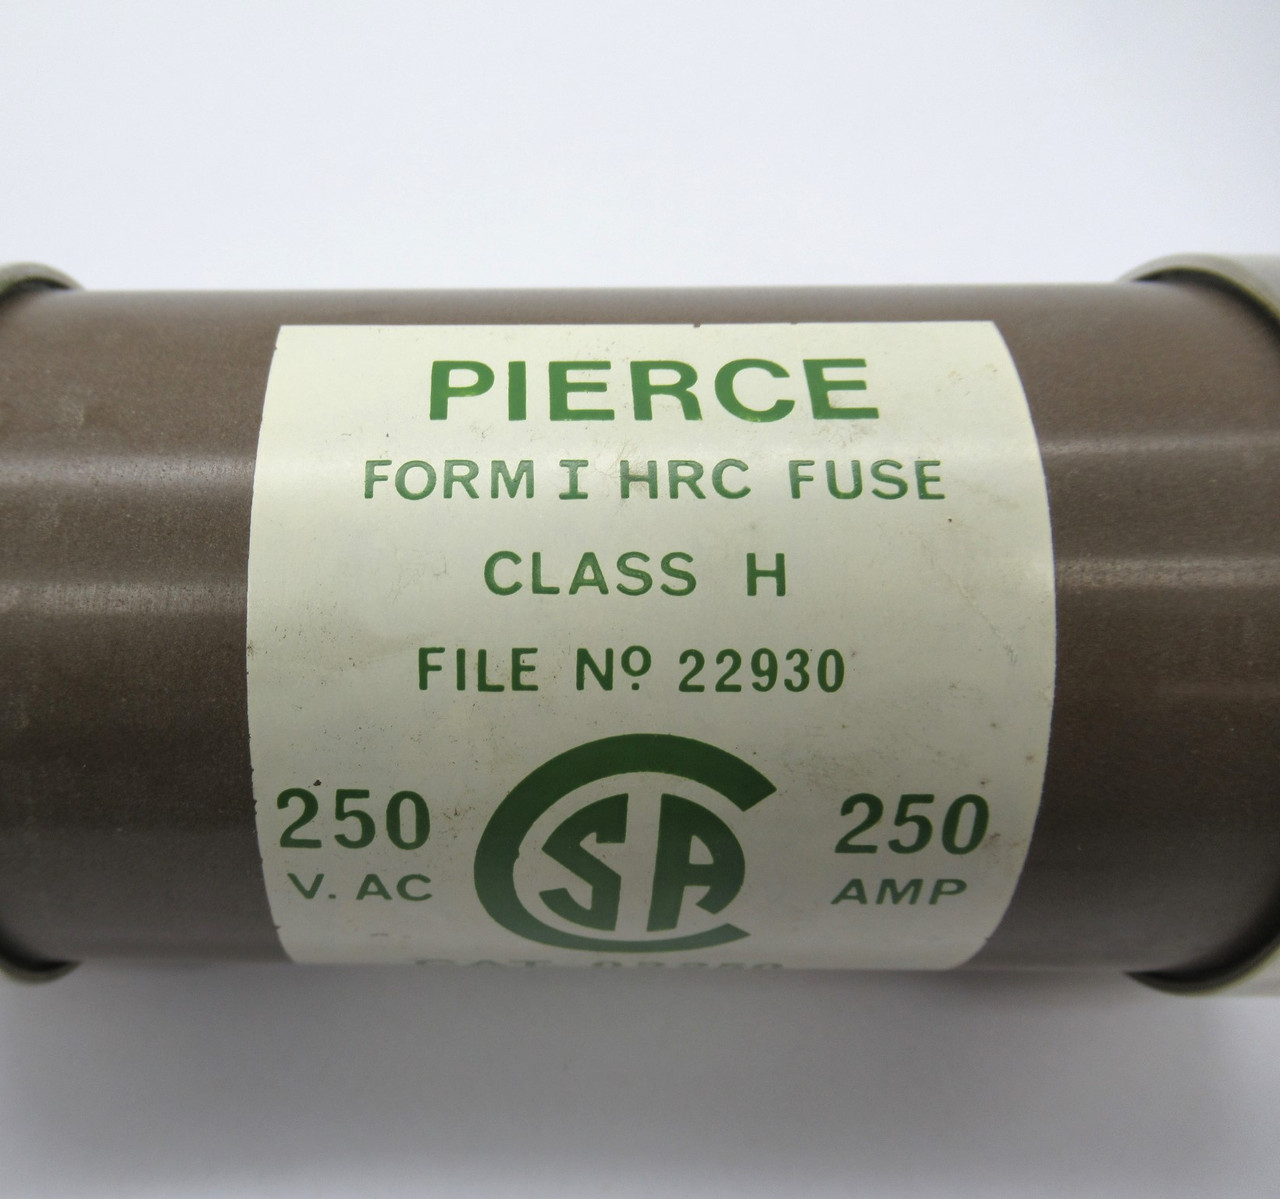 Pierce 02250 Form I HRC Fuse Class H 250A 250V USED